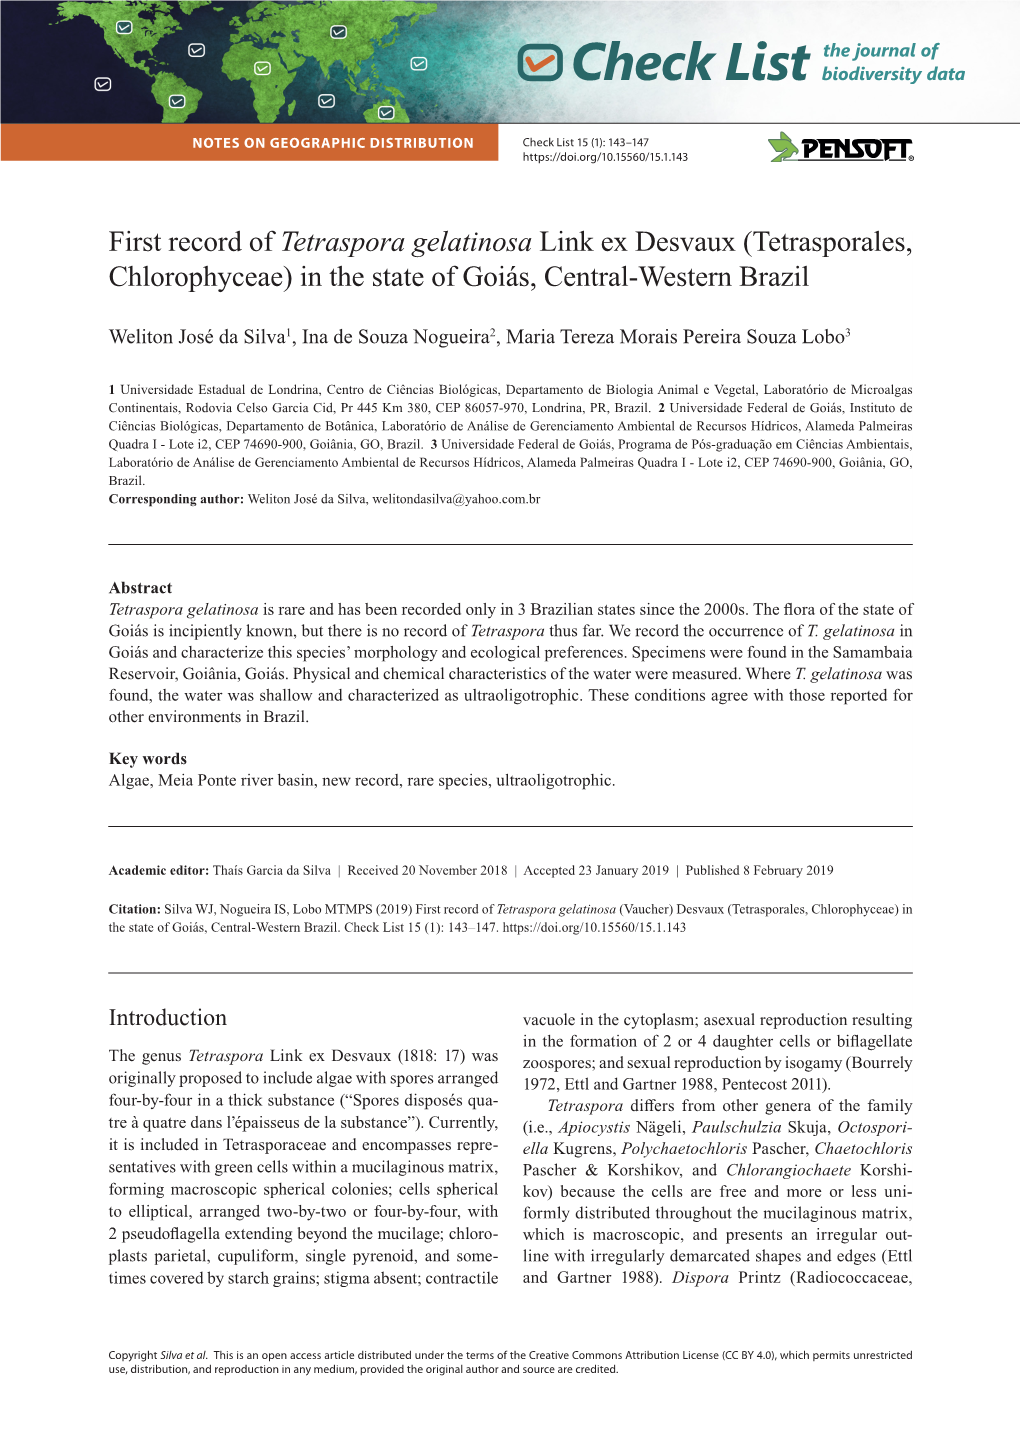 Lobo MTMPS (2019) First Record of Tetraspora Gelatinosa (Vaucher) Desvaux (Tetrasporales, Chlorophyceae) in the State of Goiás, Central-Western Brazil